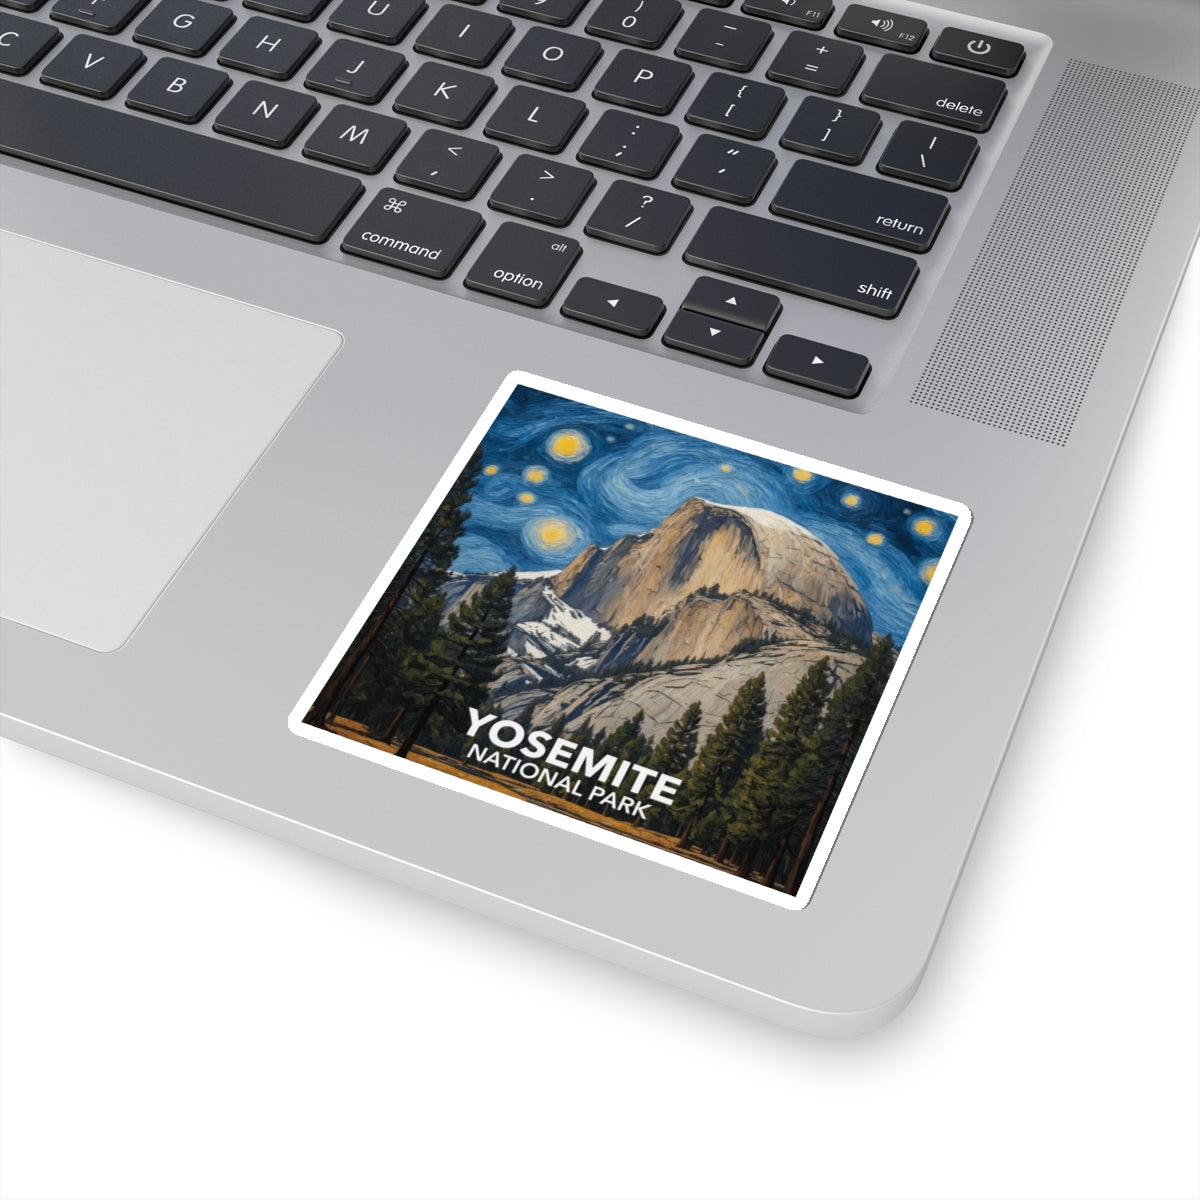 Yosemite National Park Sticker - The Starry Night